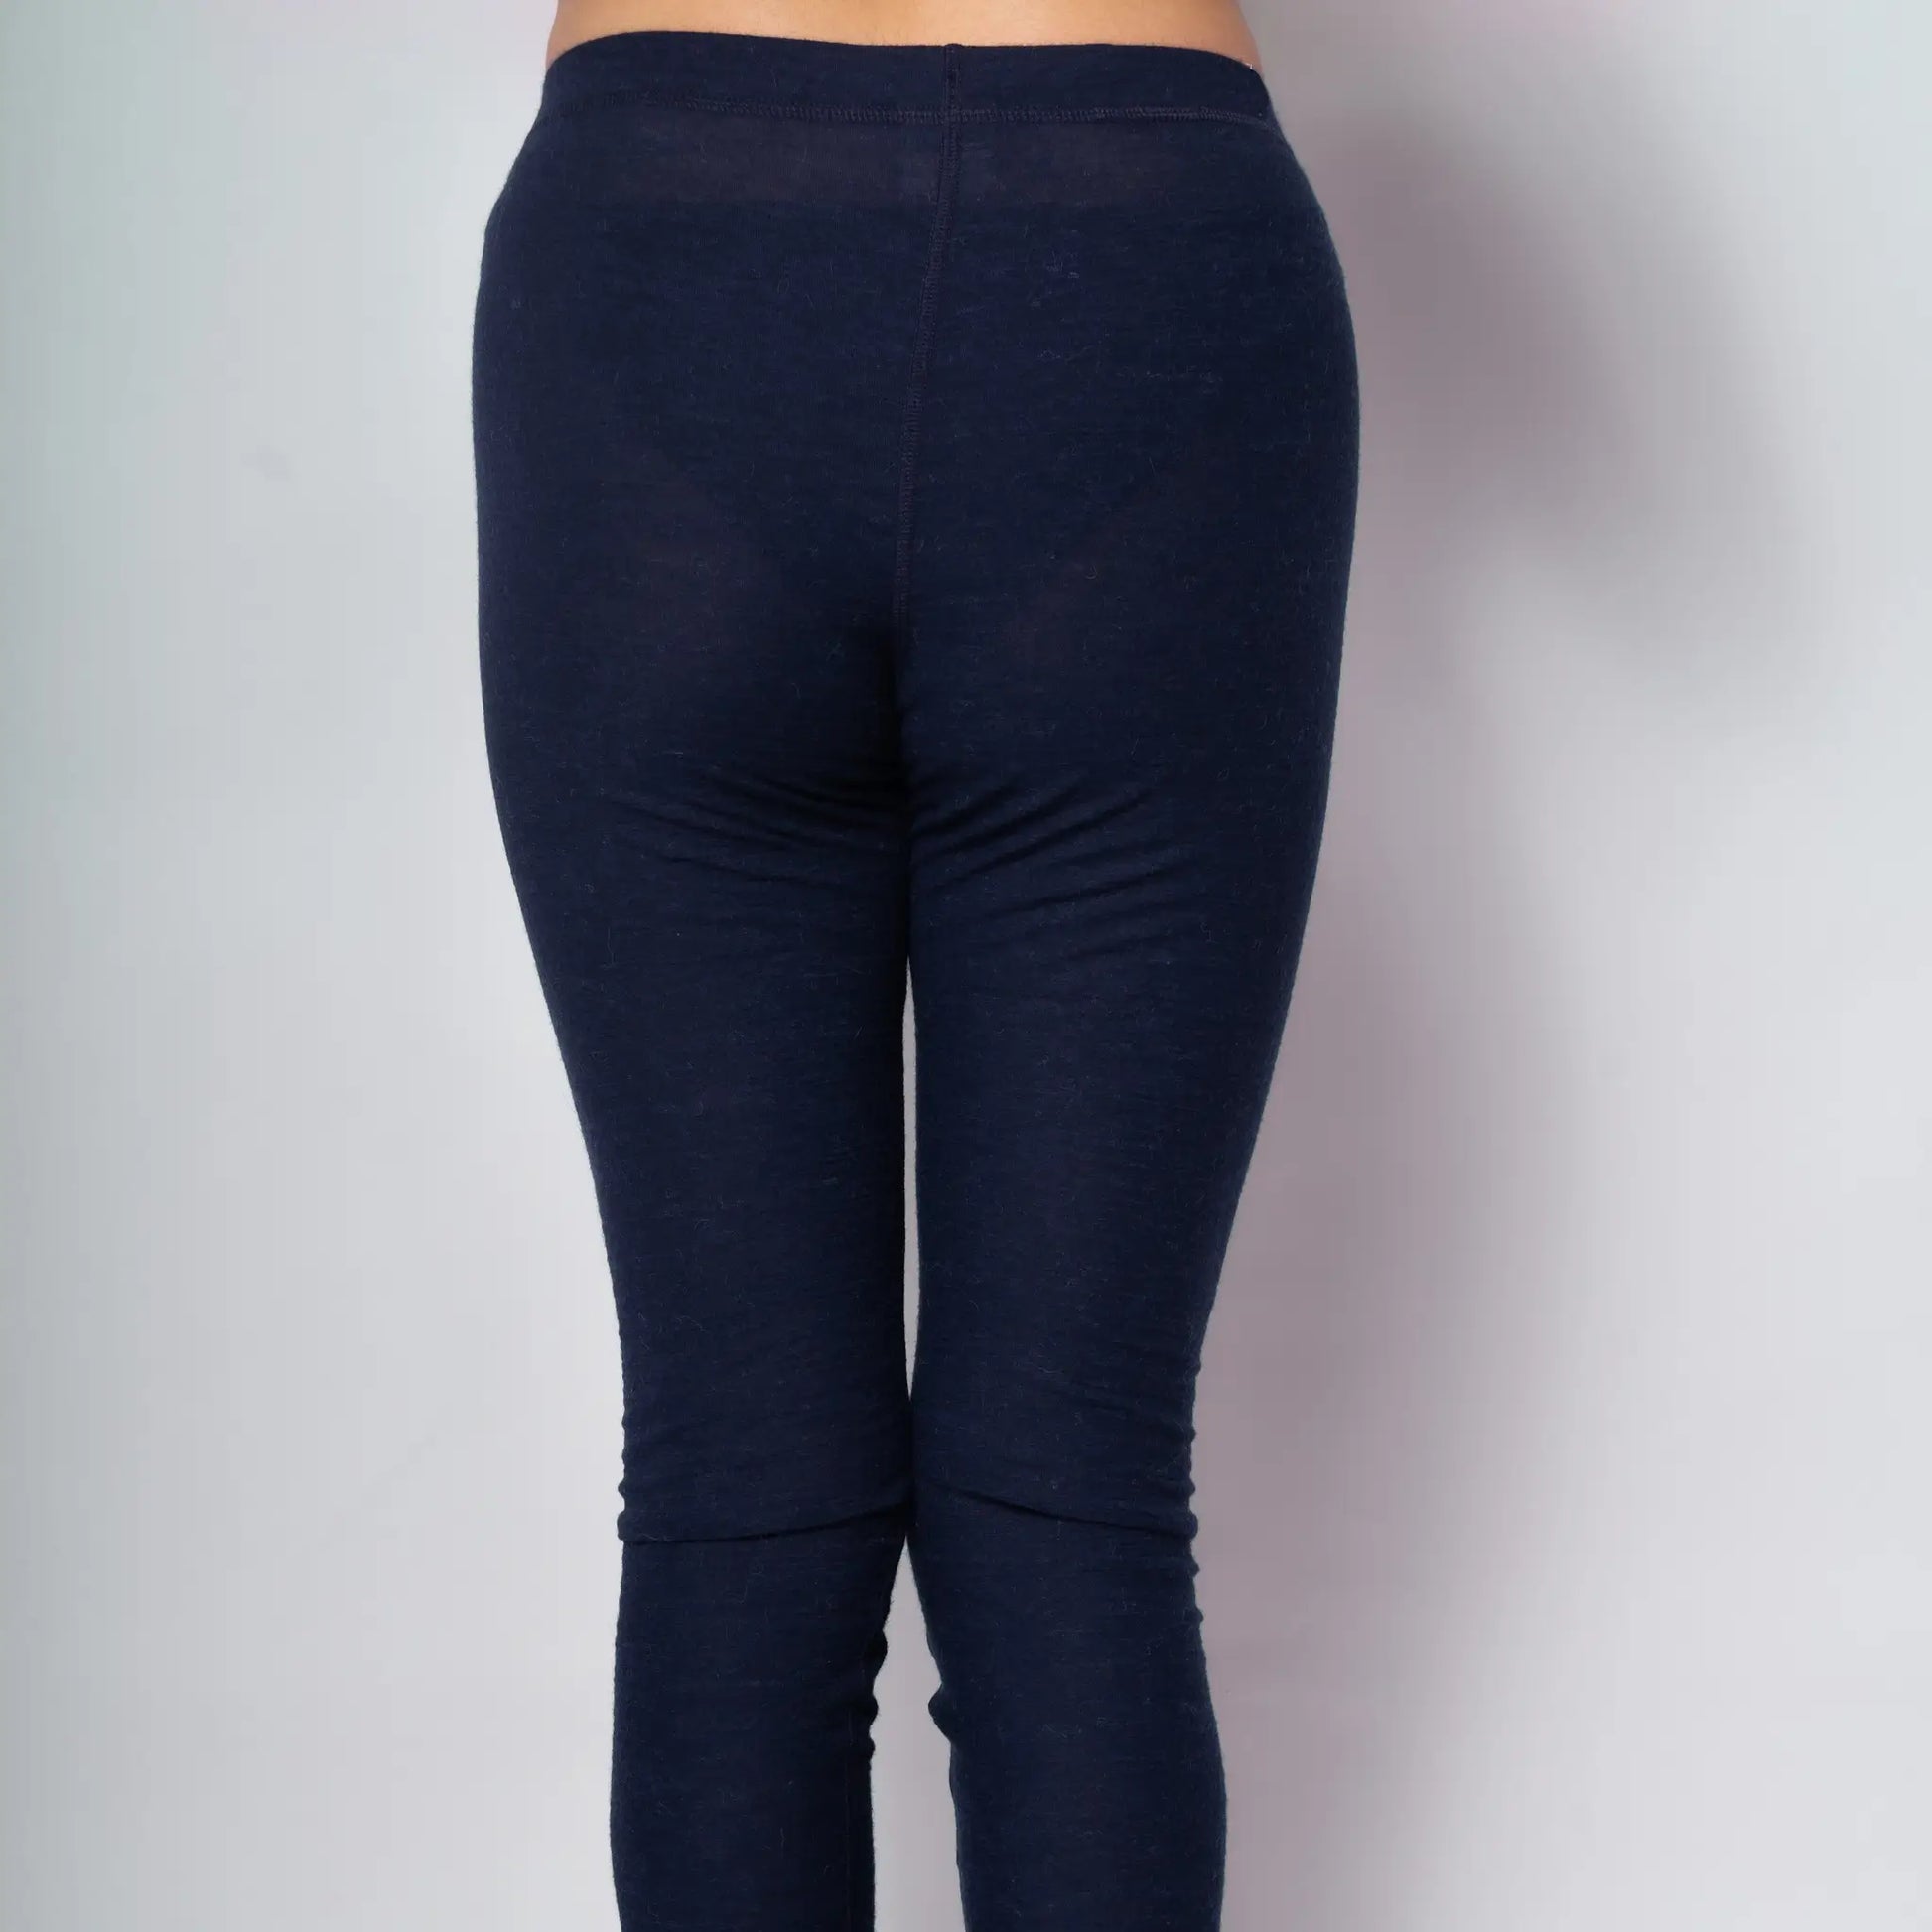 womens leggings ultralight 160 natural wool color navy blue